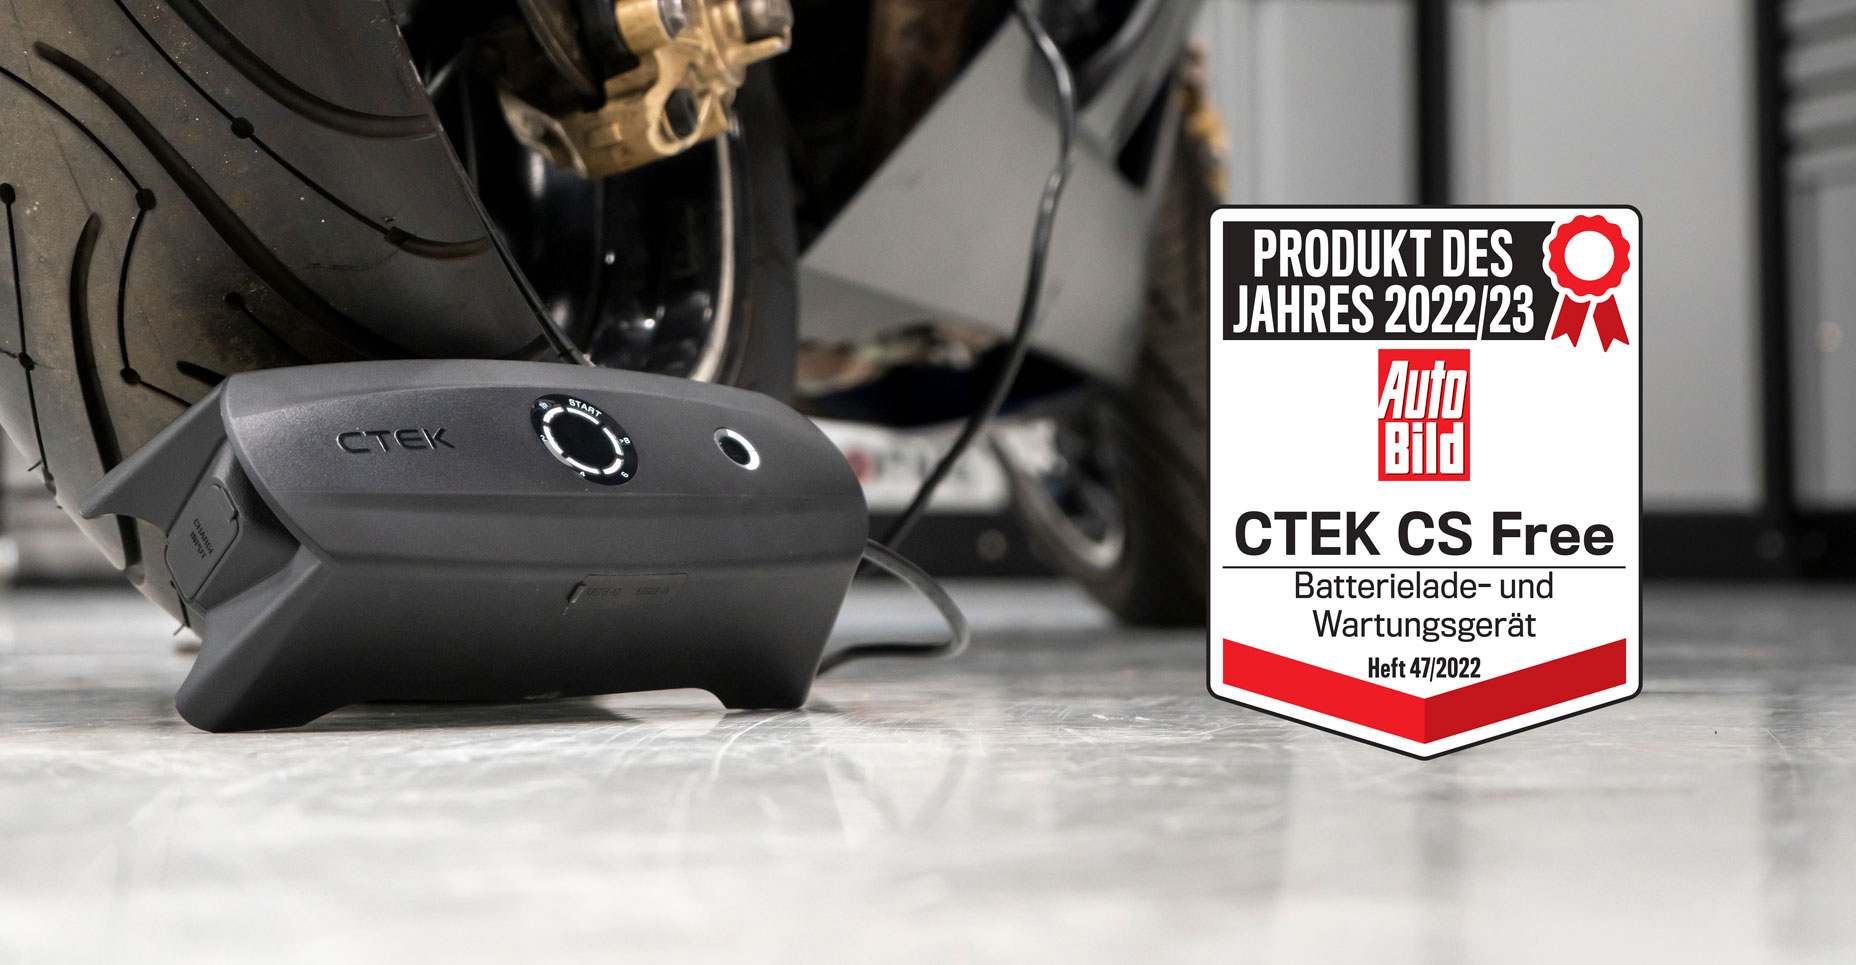 CTEK CS FREE Caricabatterie portatile multifunzionale 4 in 1 da 12 V con tecnologia Adaptive Boost, Codice: 40-462 - ctek.com